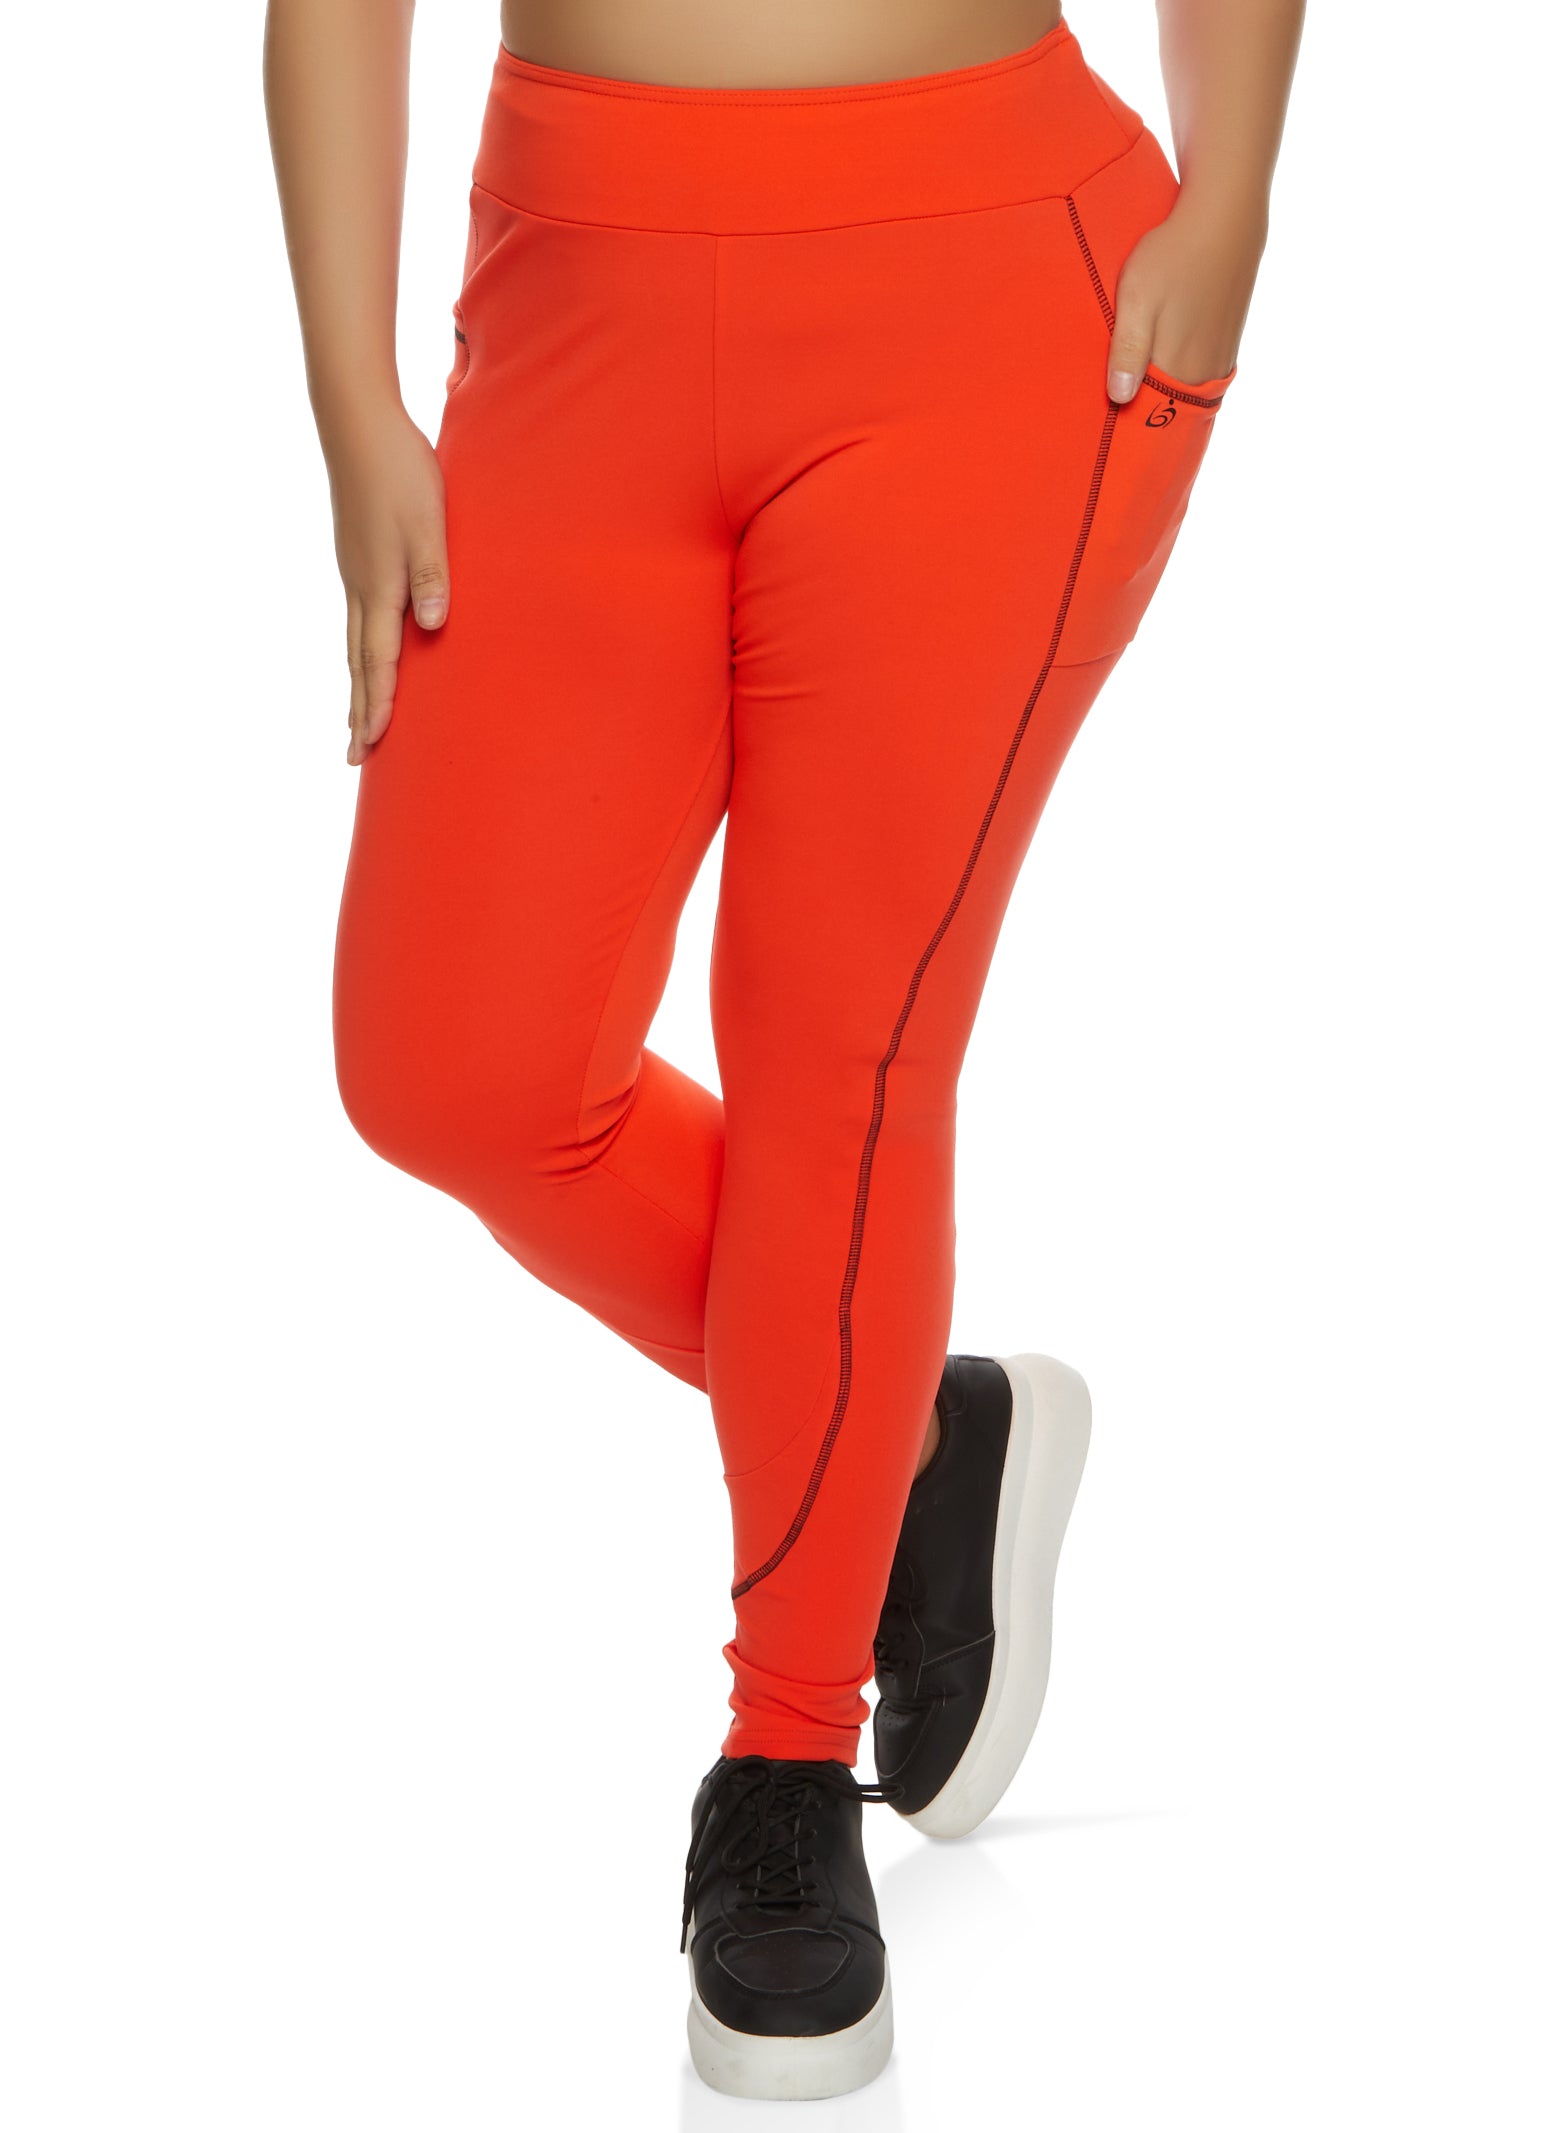 Neon Orange Nylon Spandex Tights Style# 1008 | We Love Colors